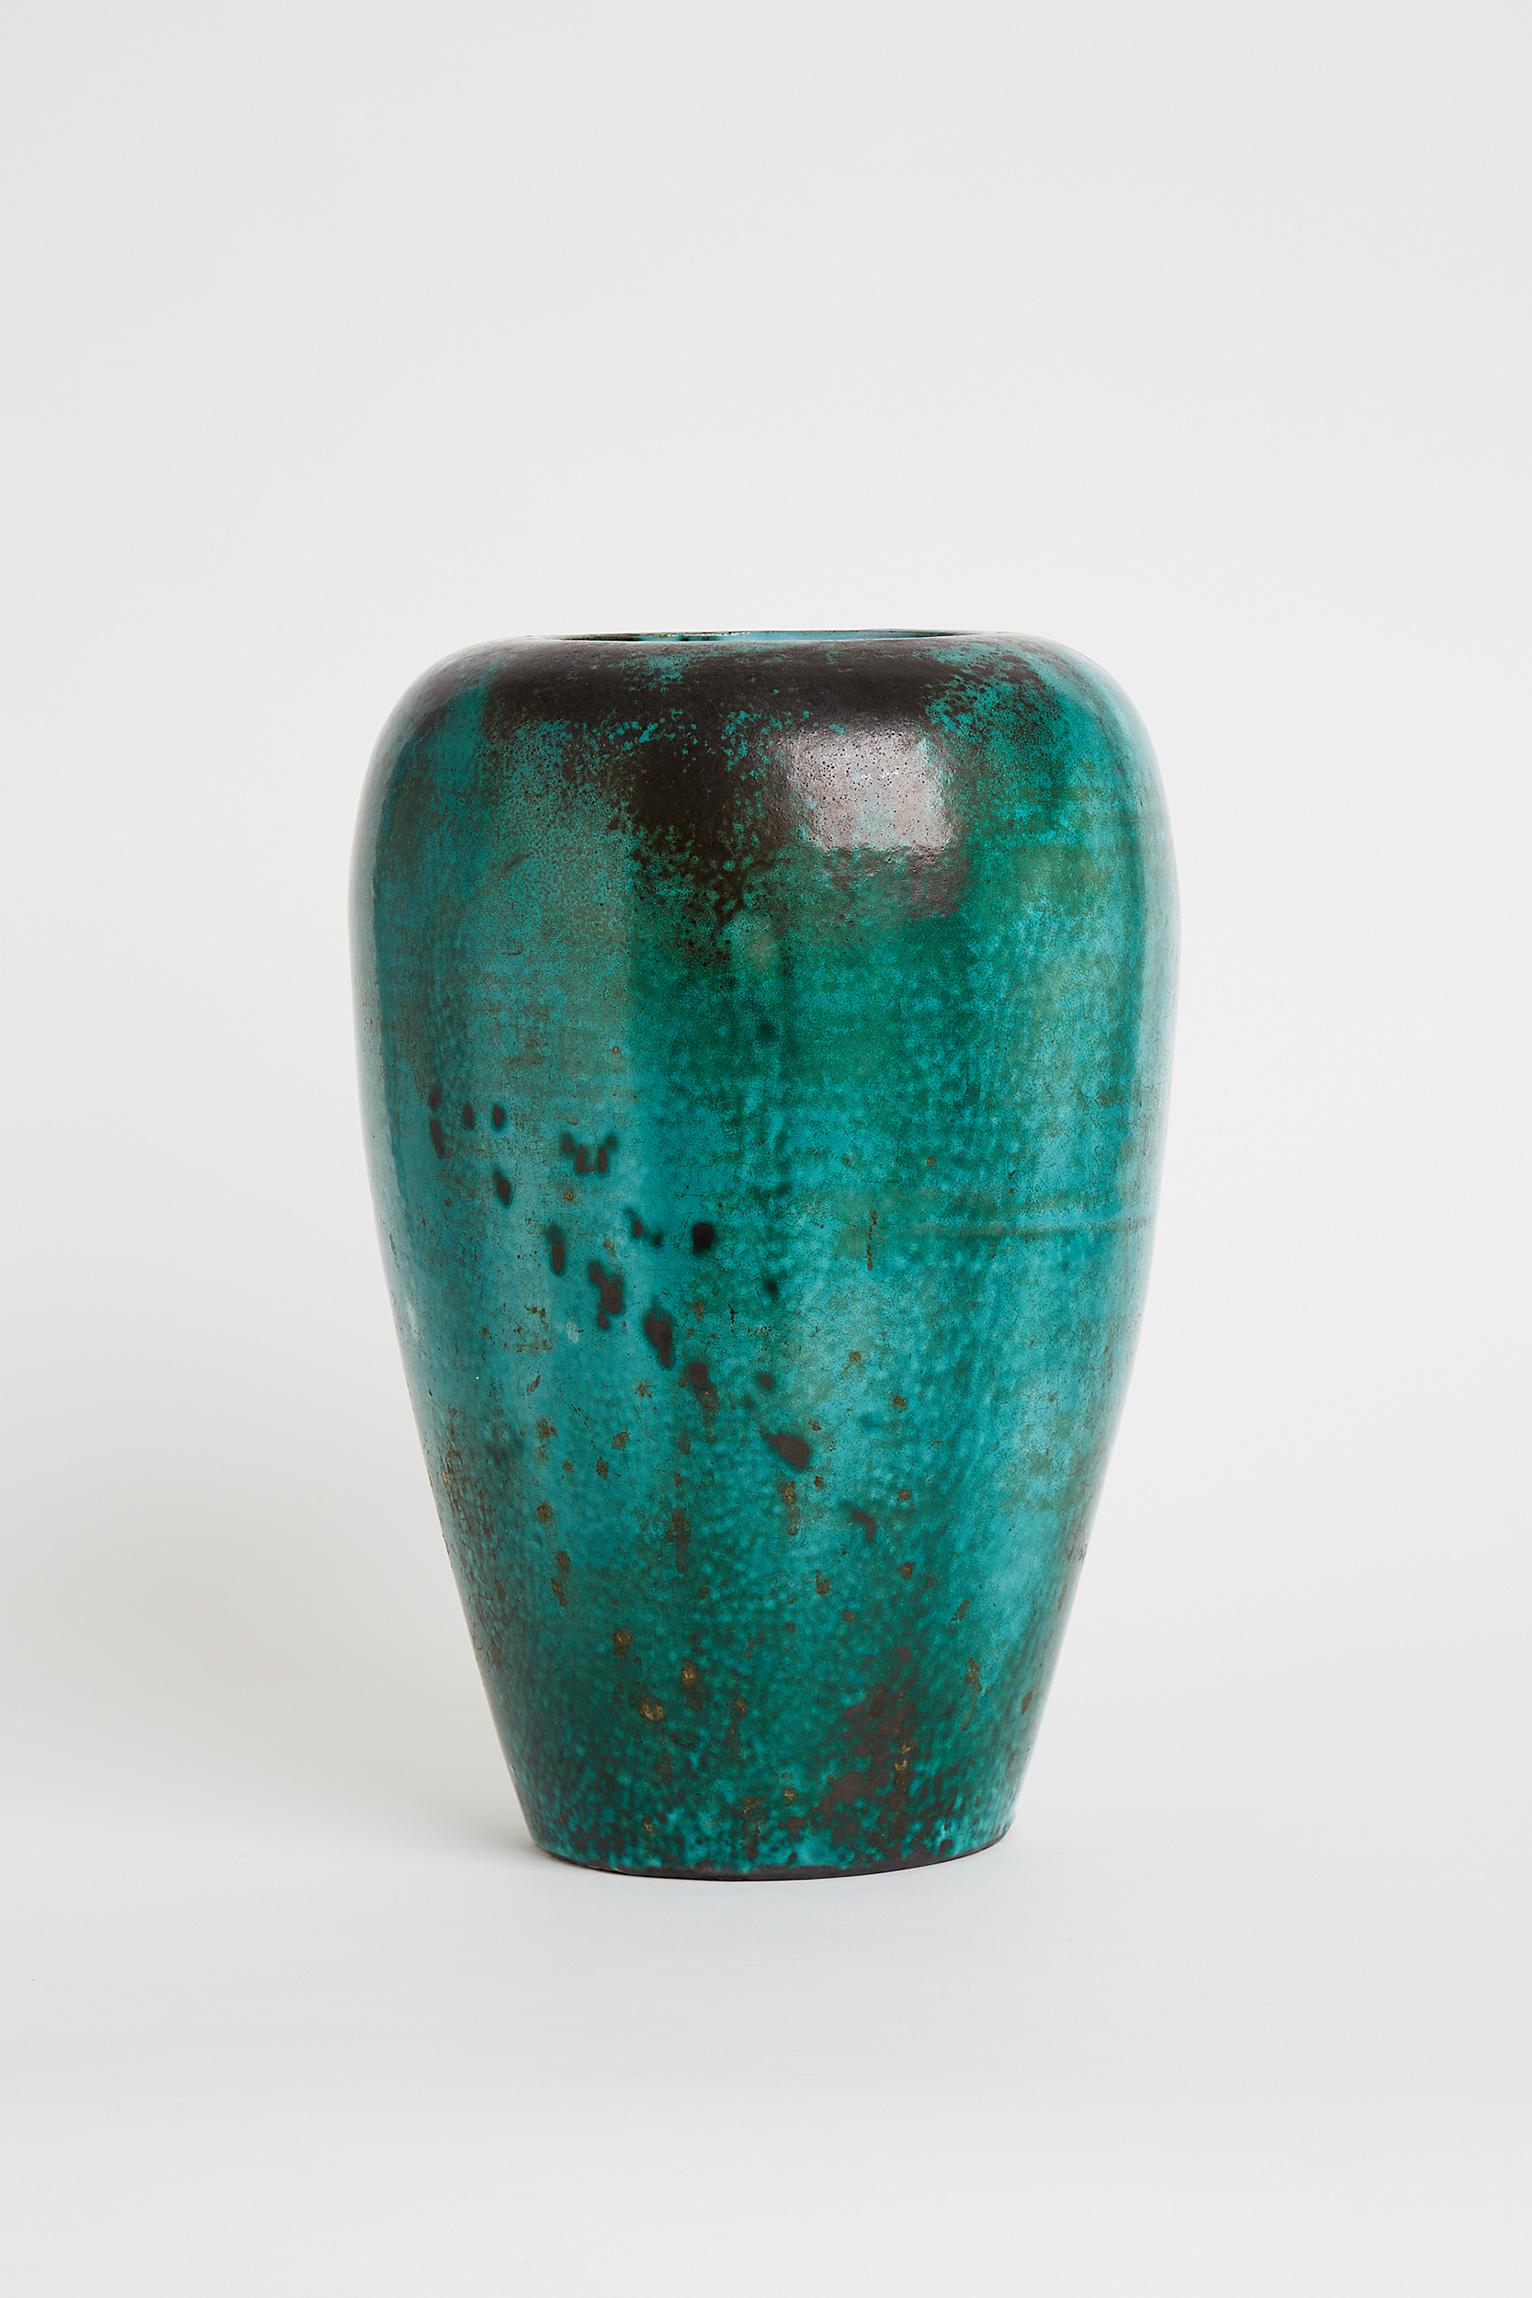 Ceramic Very Large Green Vase by Primavera